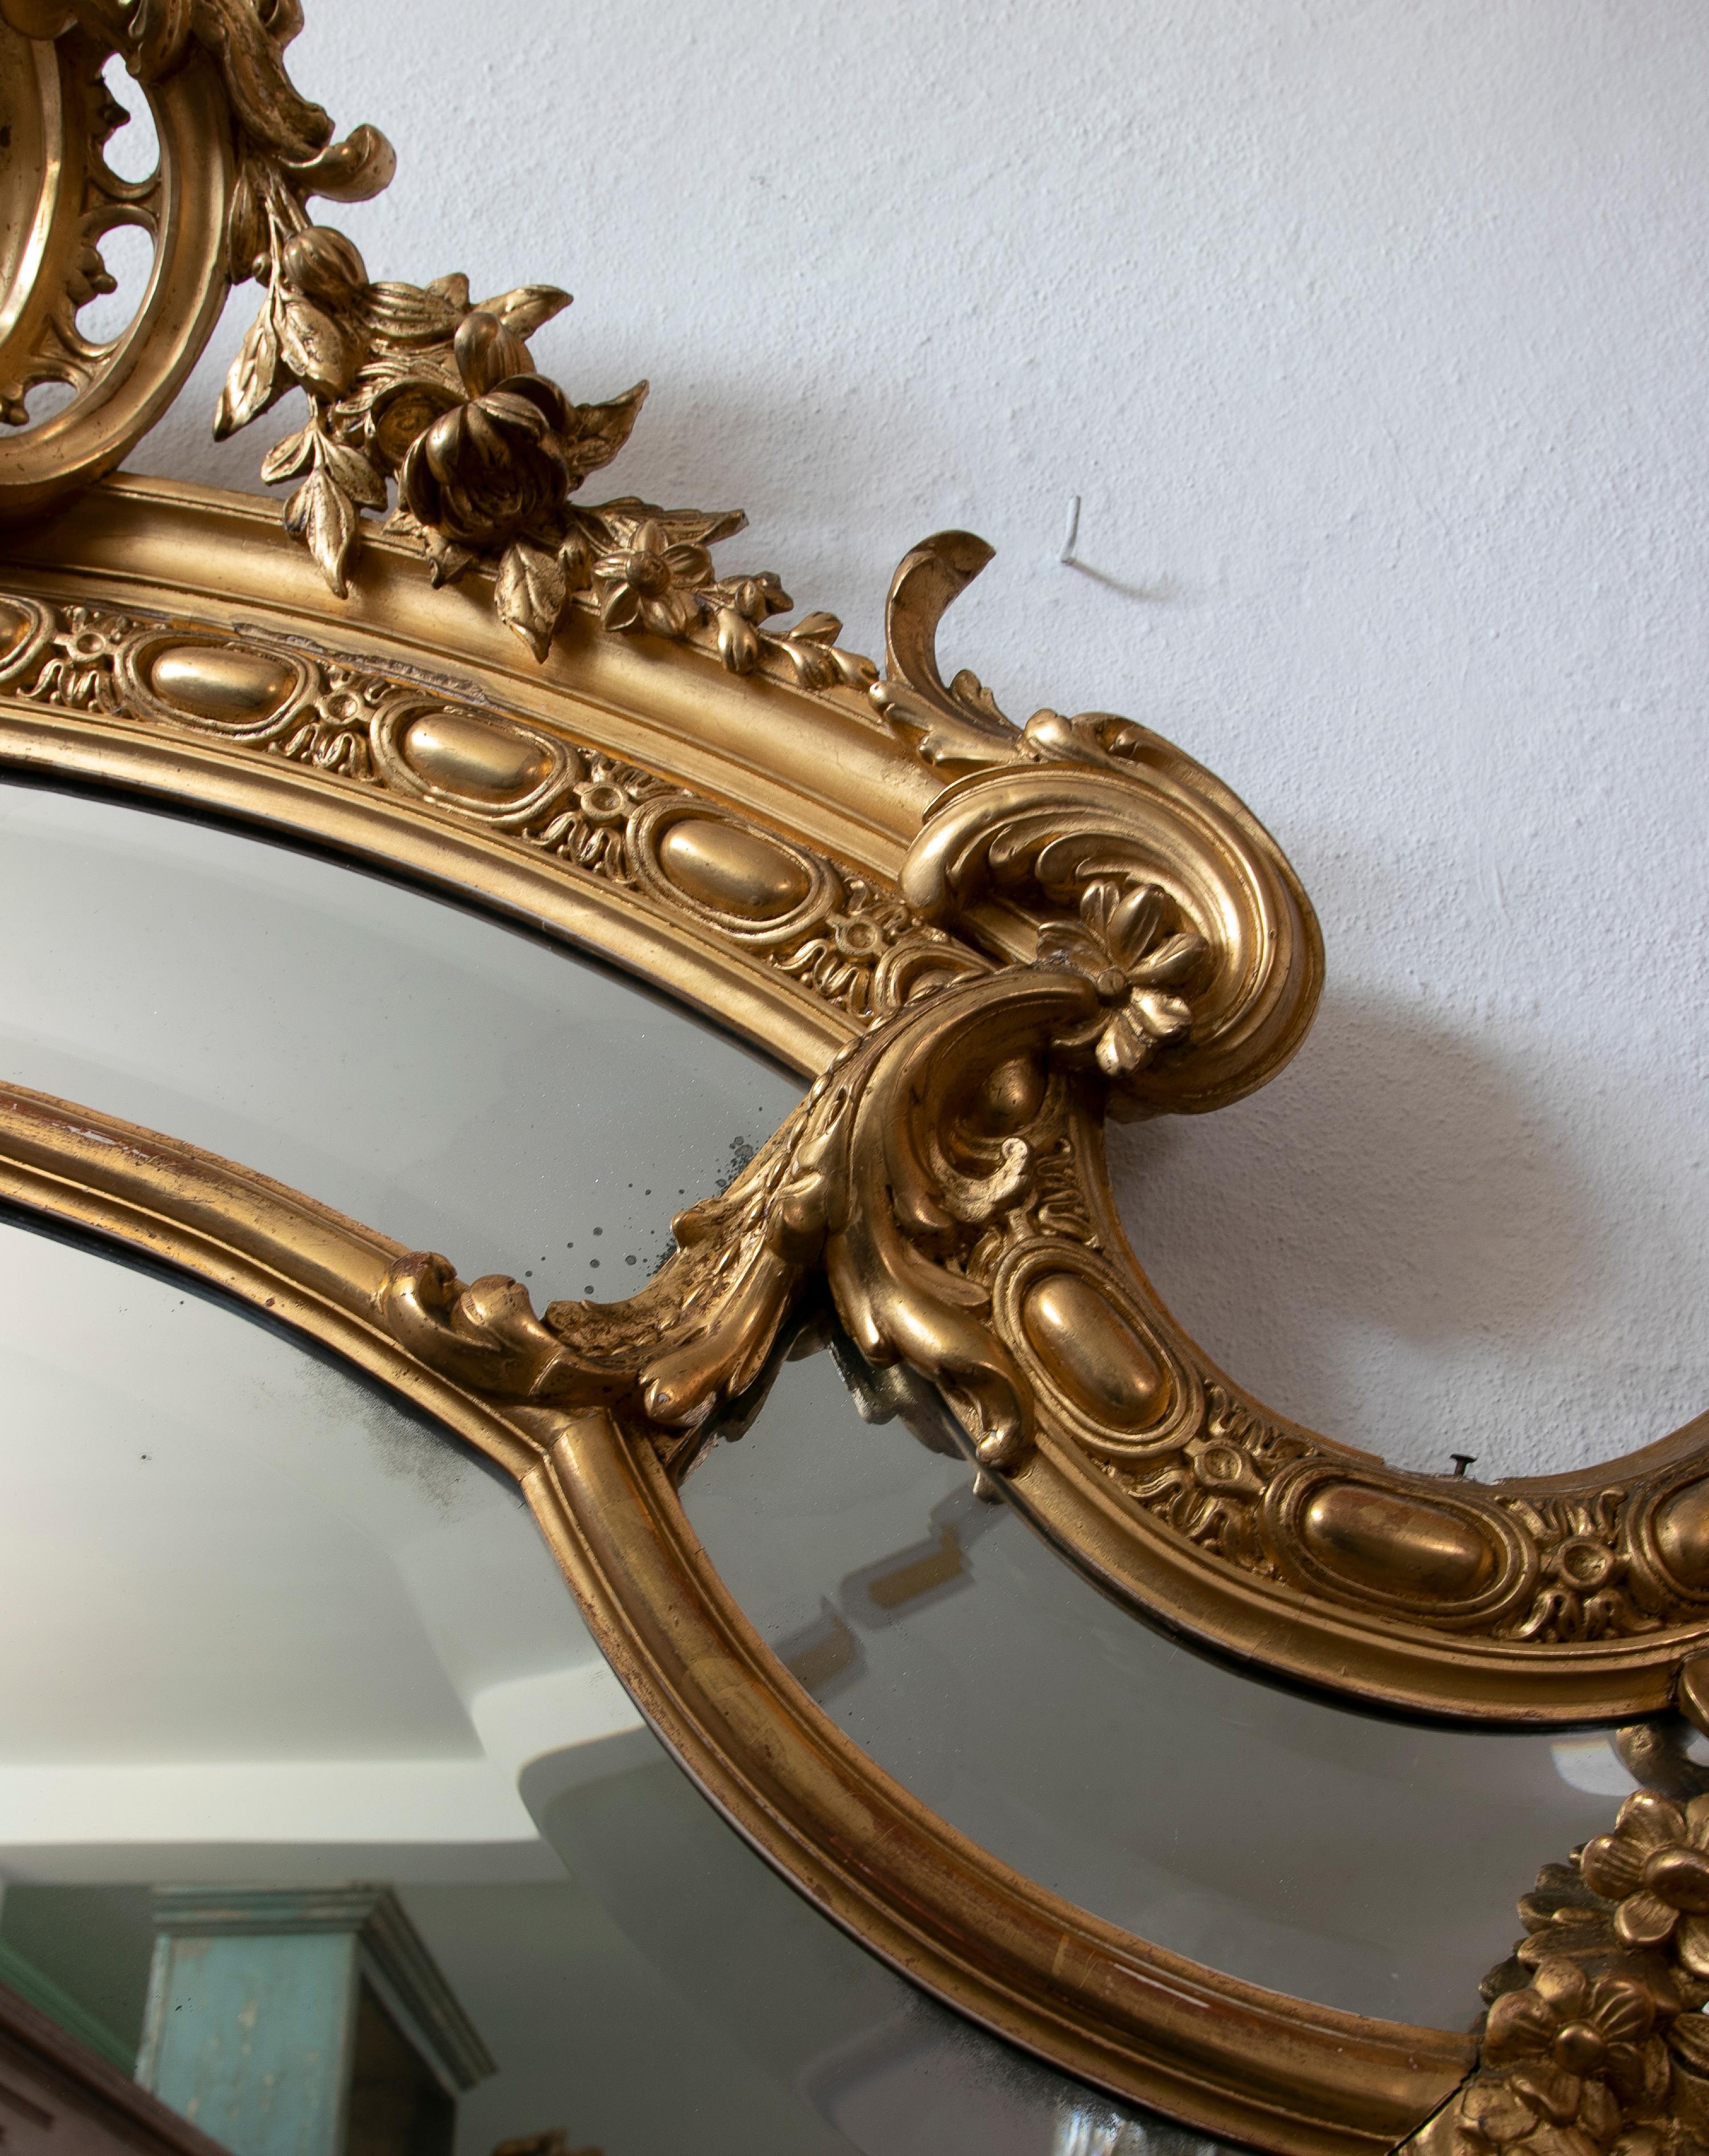 19th Century 1850s French Gold Giltwood Wall Mirror w/ Acanthus Leaf Scrolls Decoration